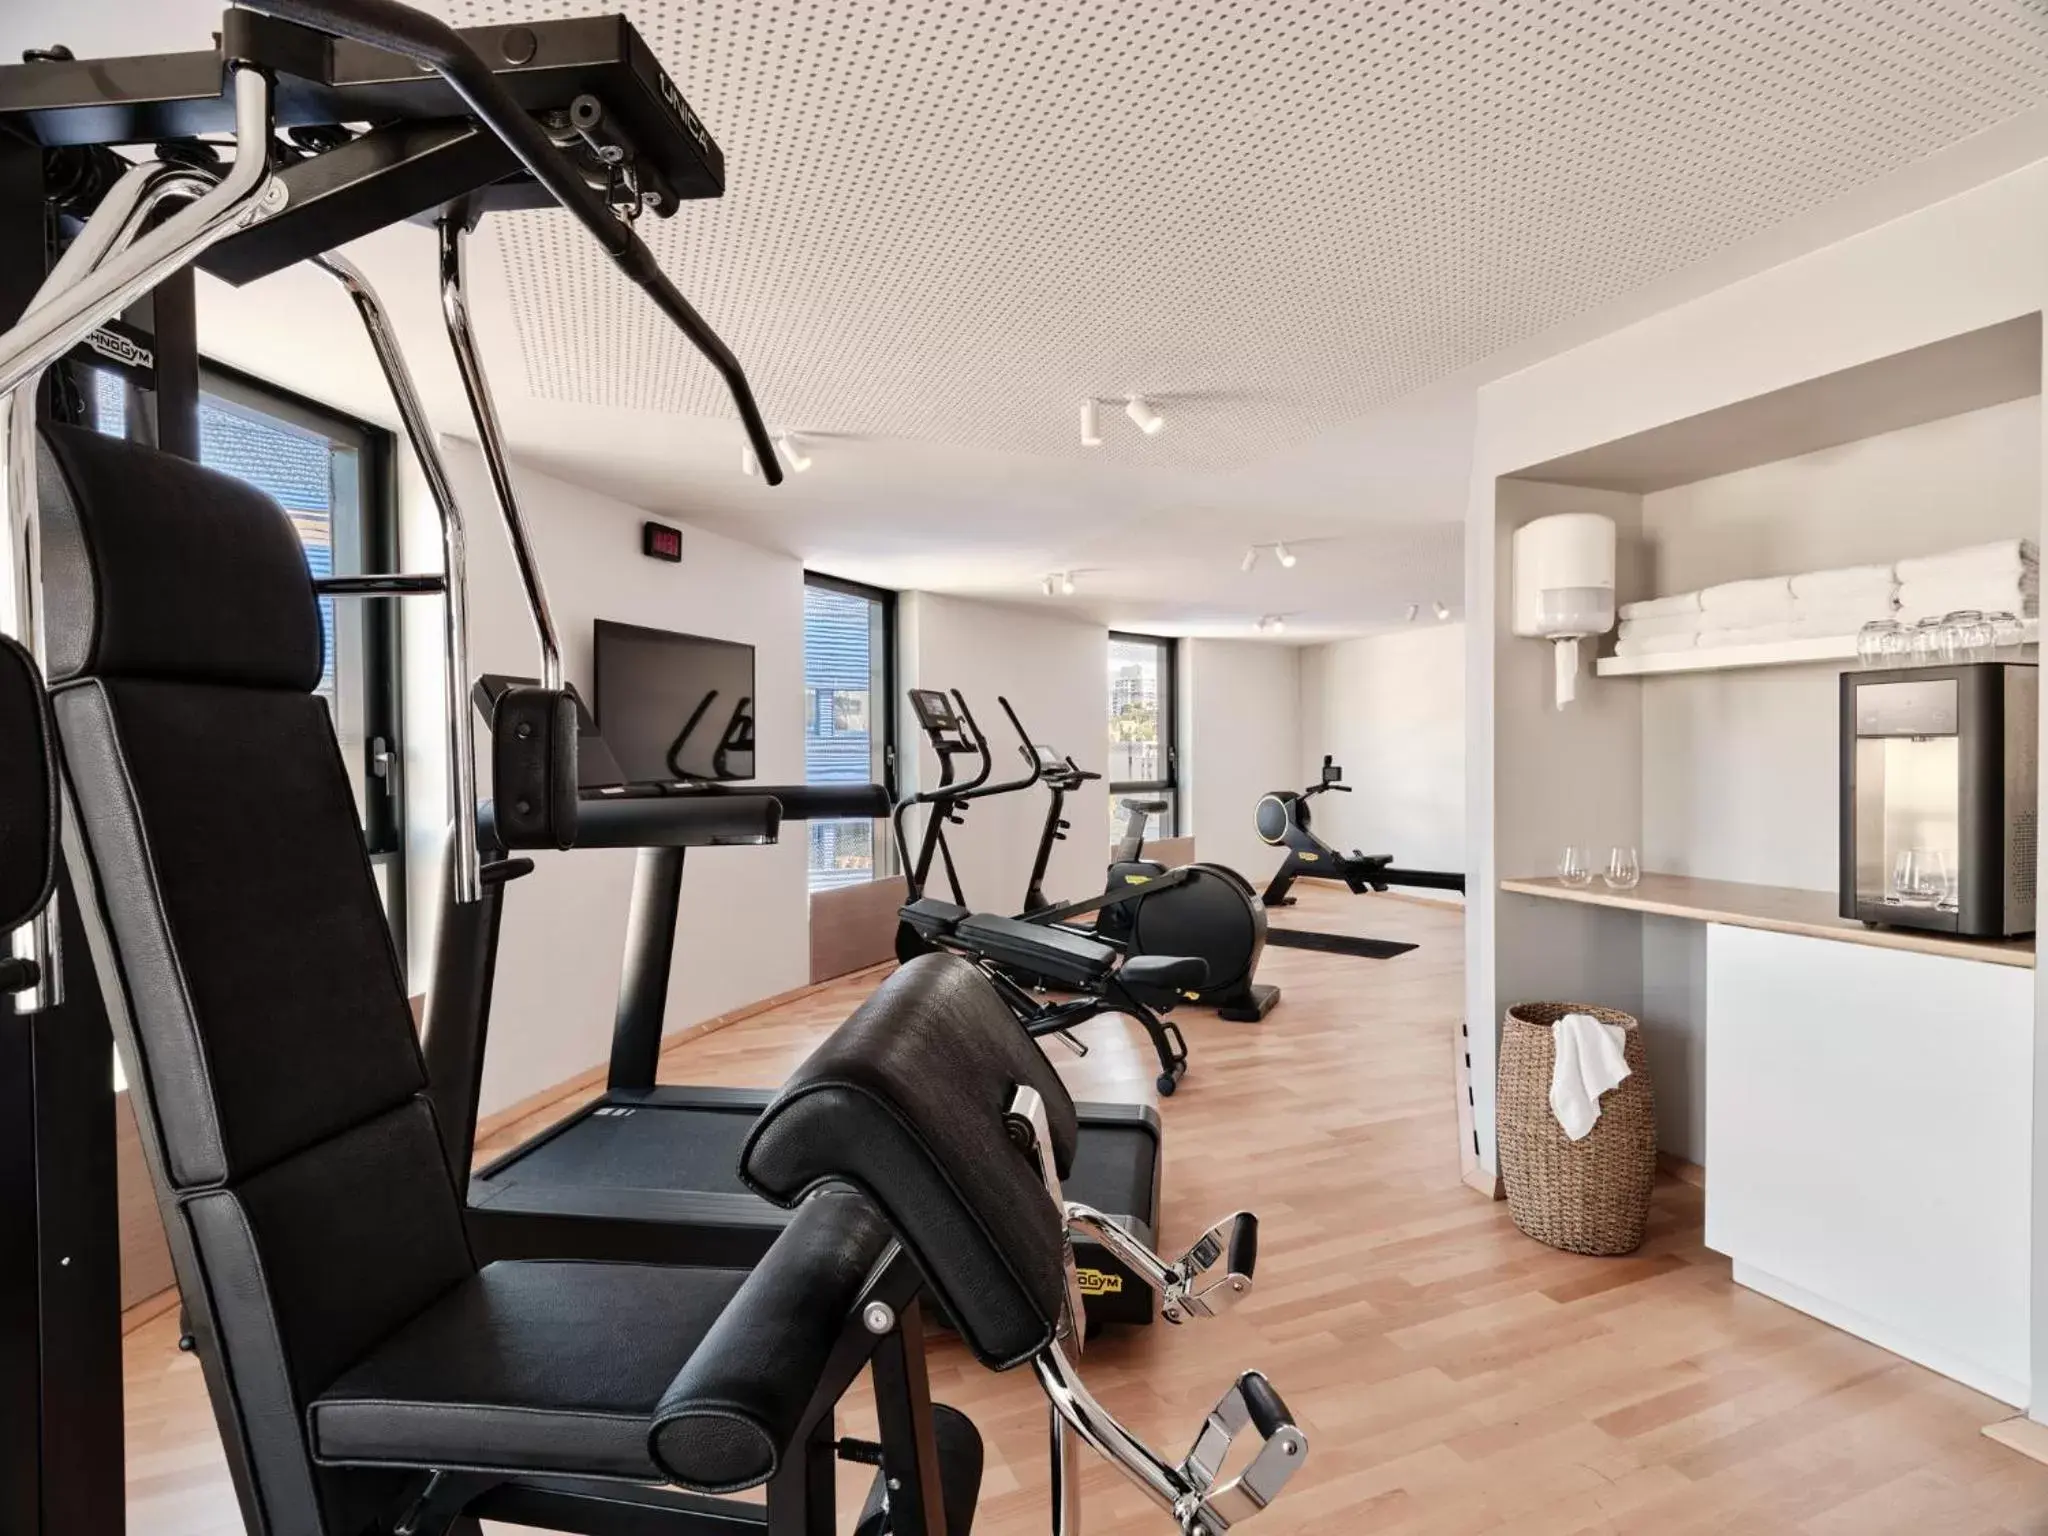 Fitness centre/facilities, Fitness Center/Facilities in Crowne Plaza - Marseille Le Dôme